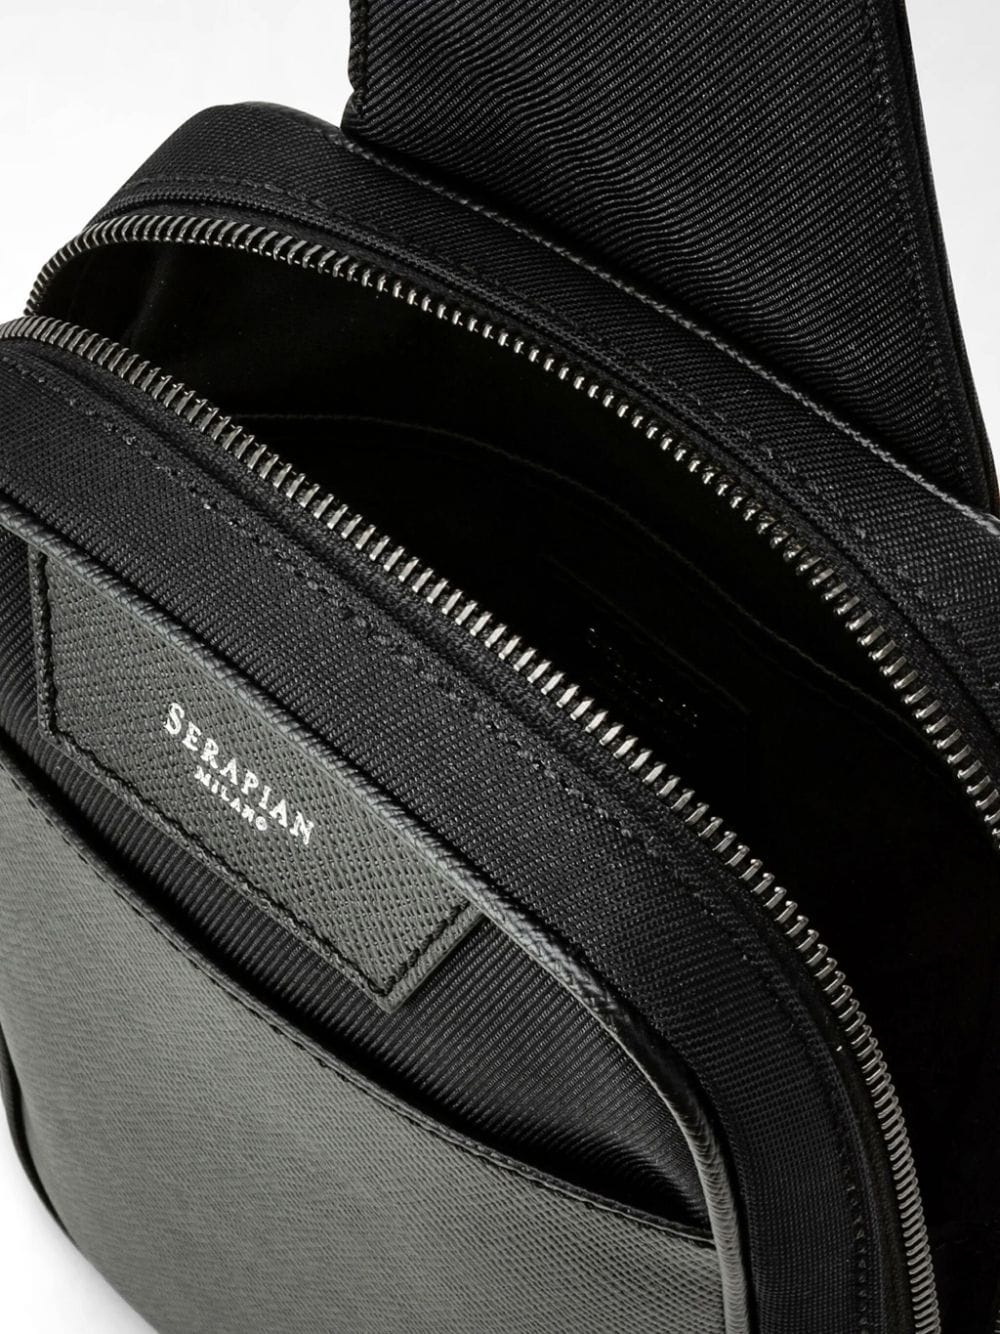 Sling Evoluzione-leather backpack - 3